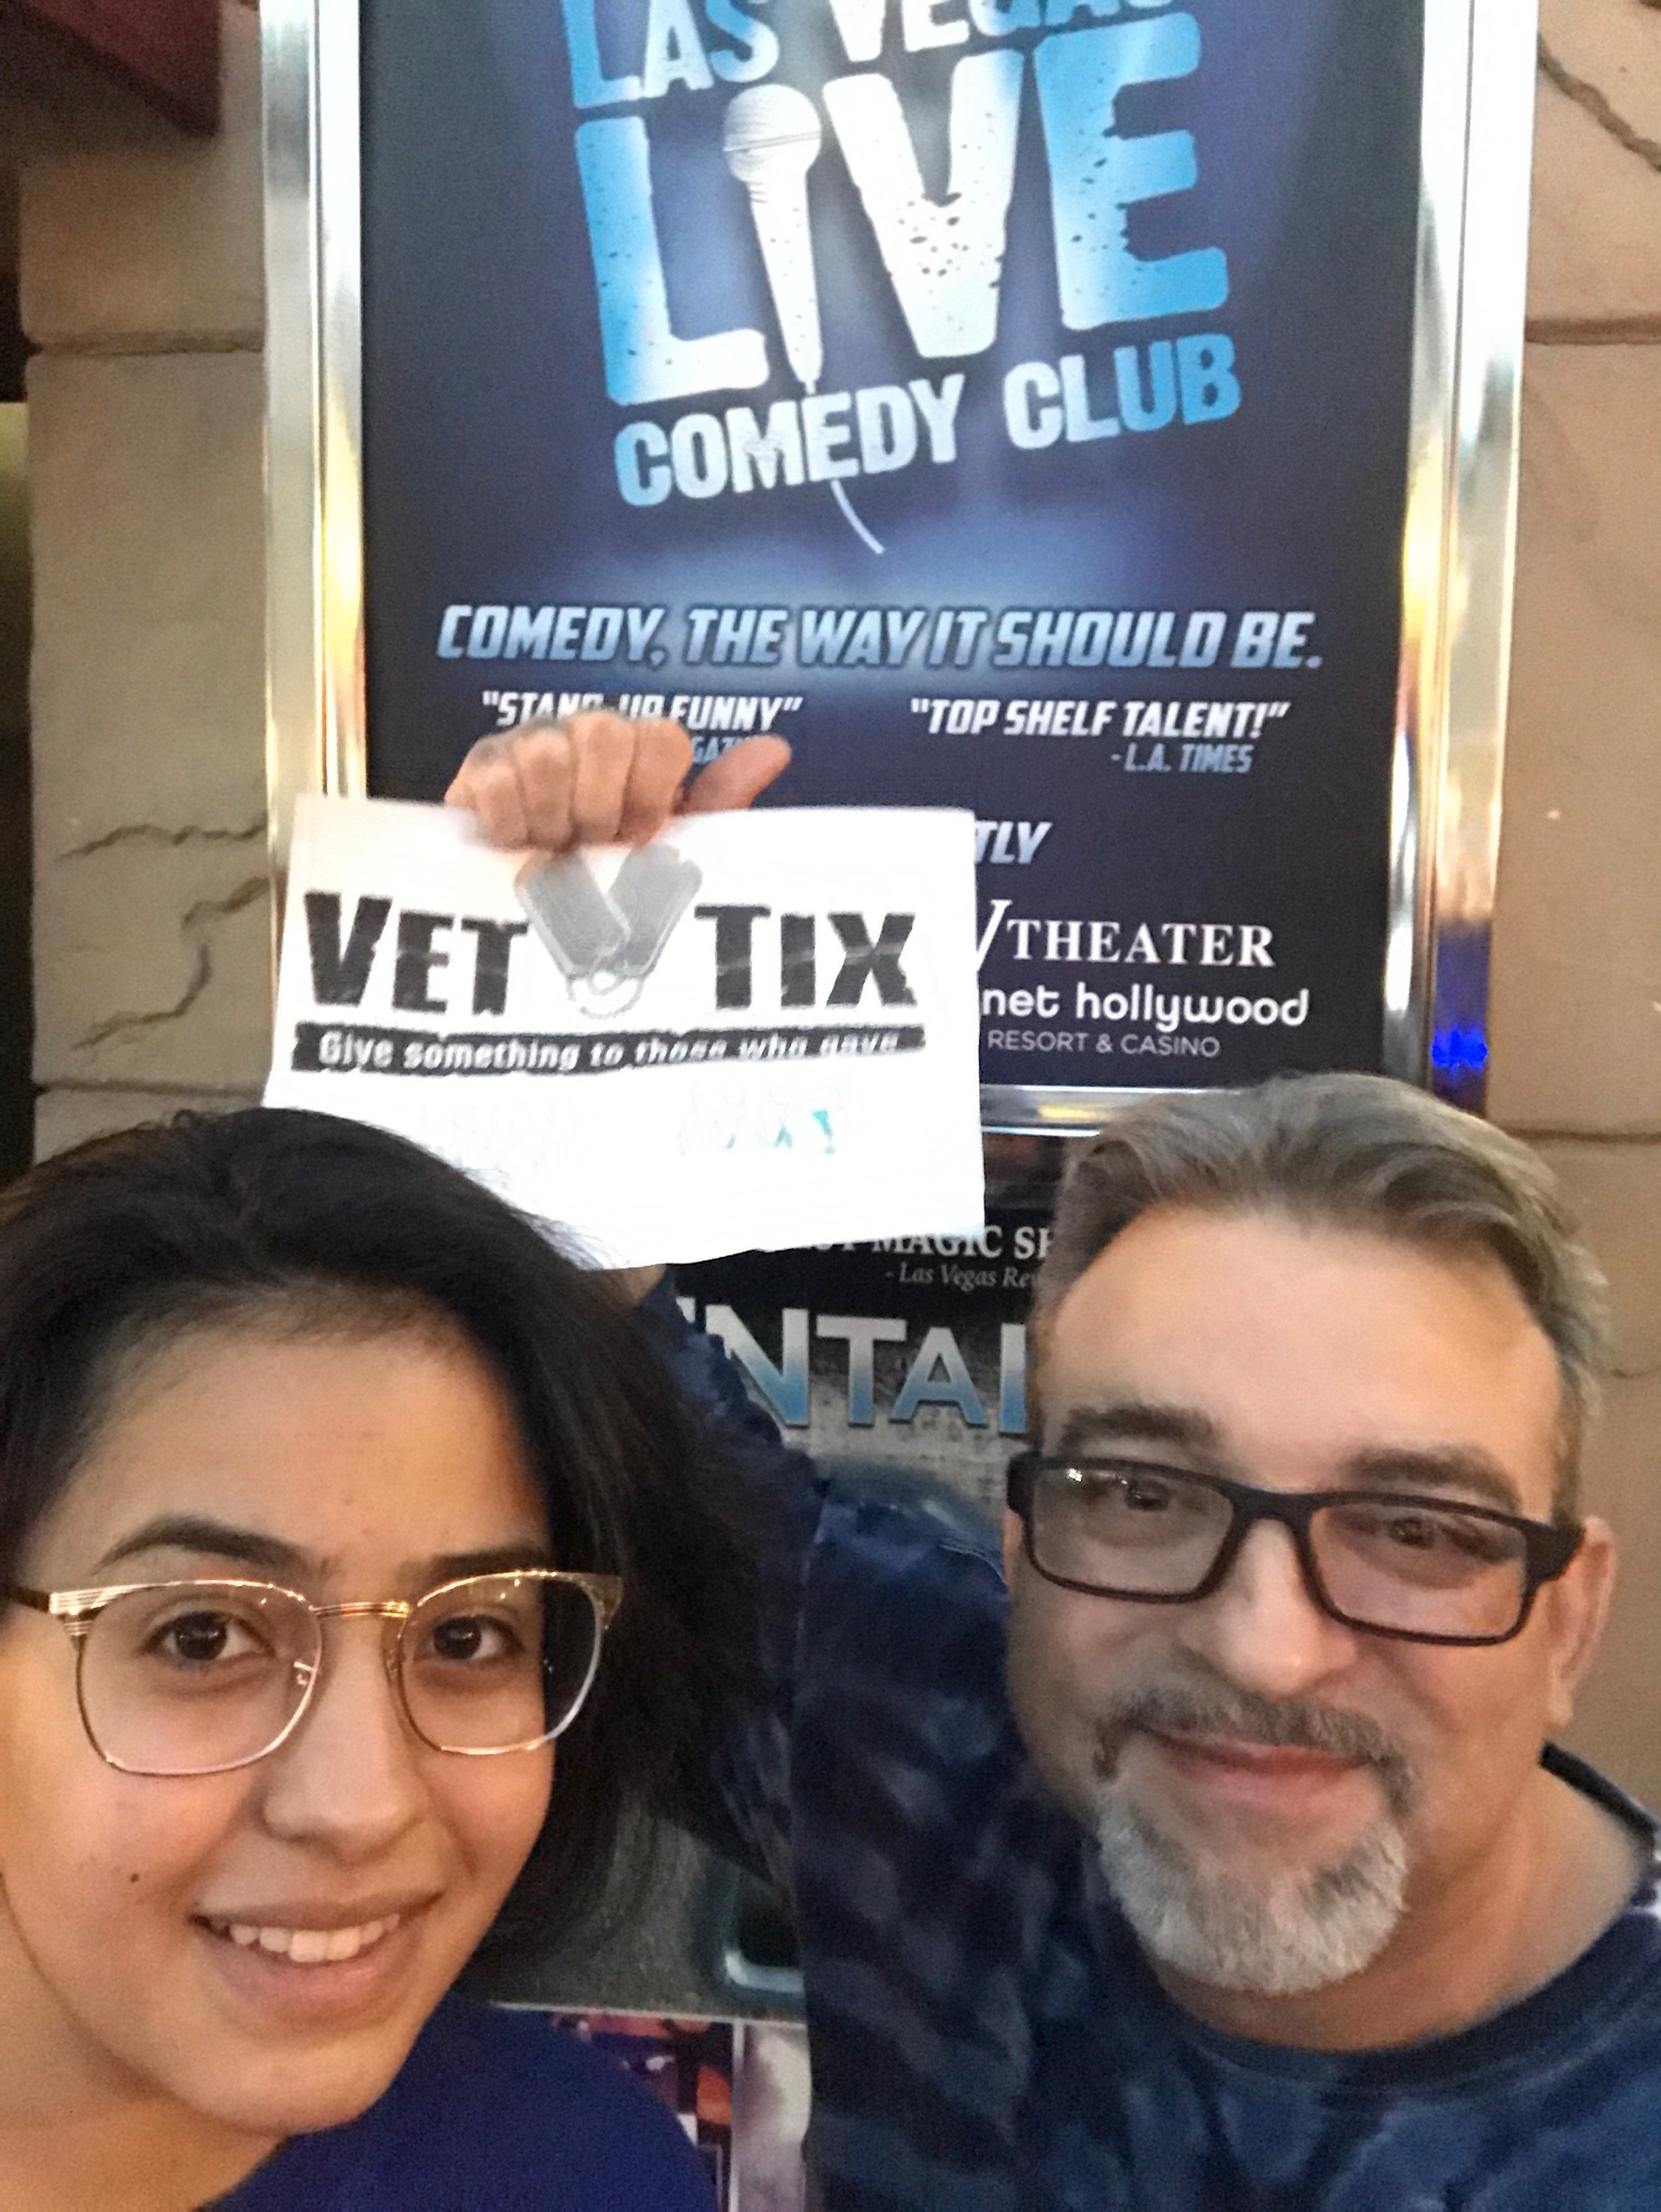 Event Feedback: Las Vegas Live Comedy Club - Monday